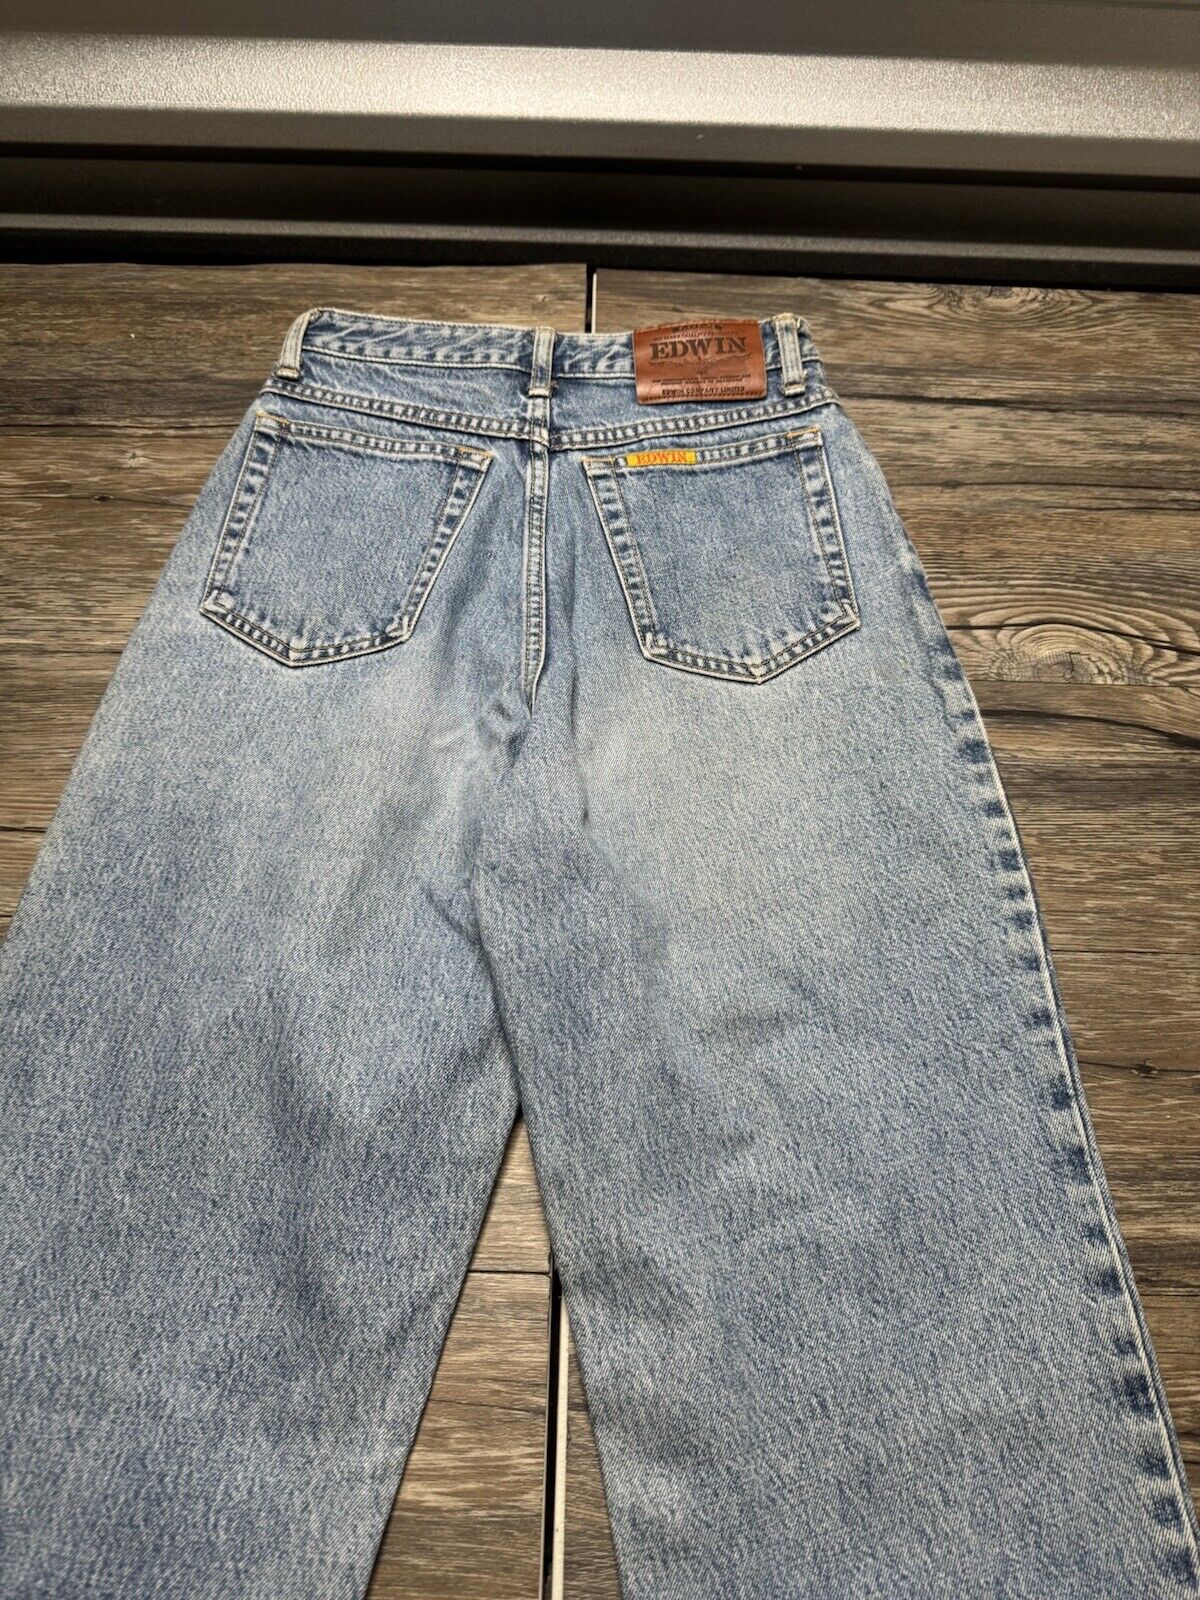 Edwin Vintage denim jeans size 29 made in japan